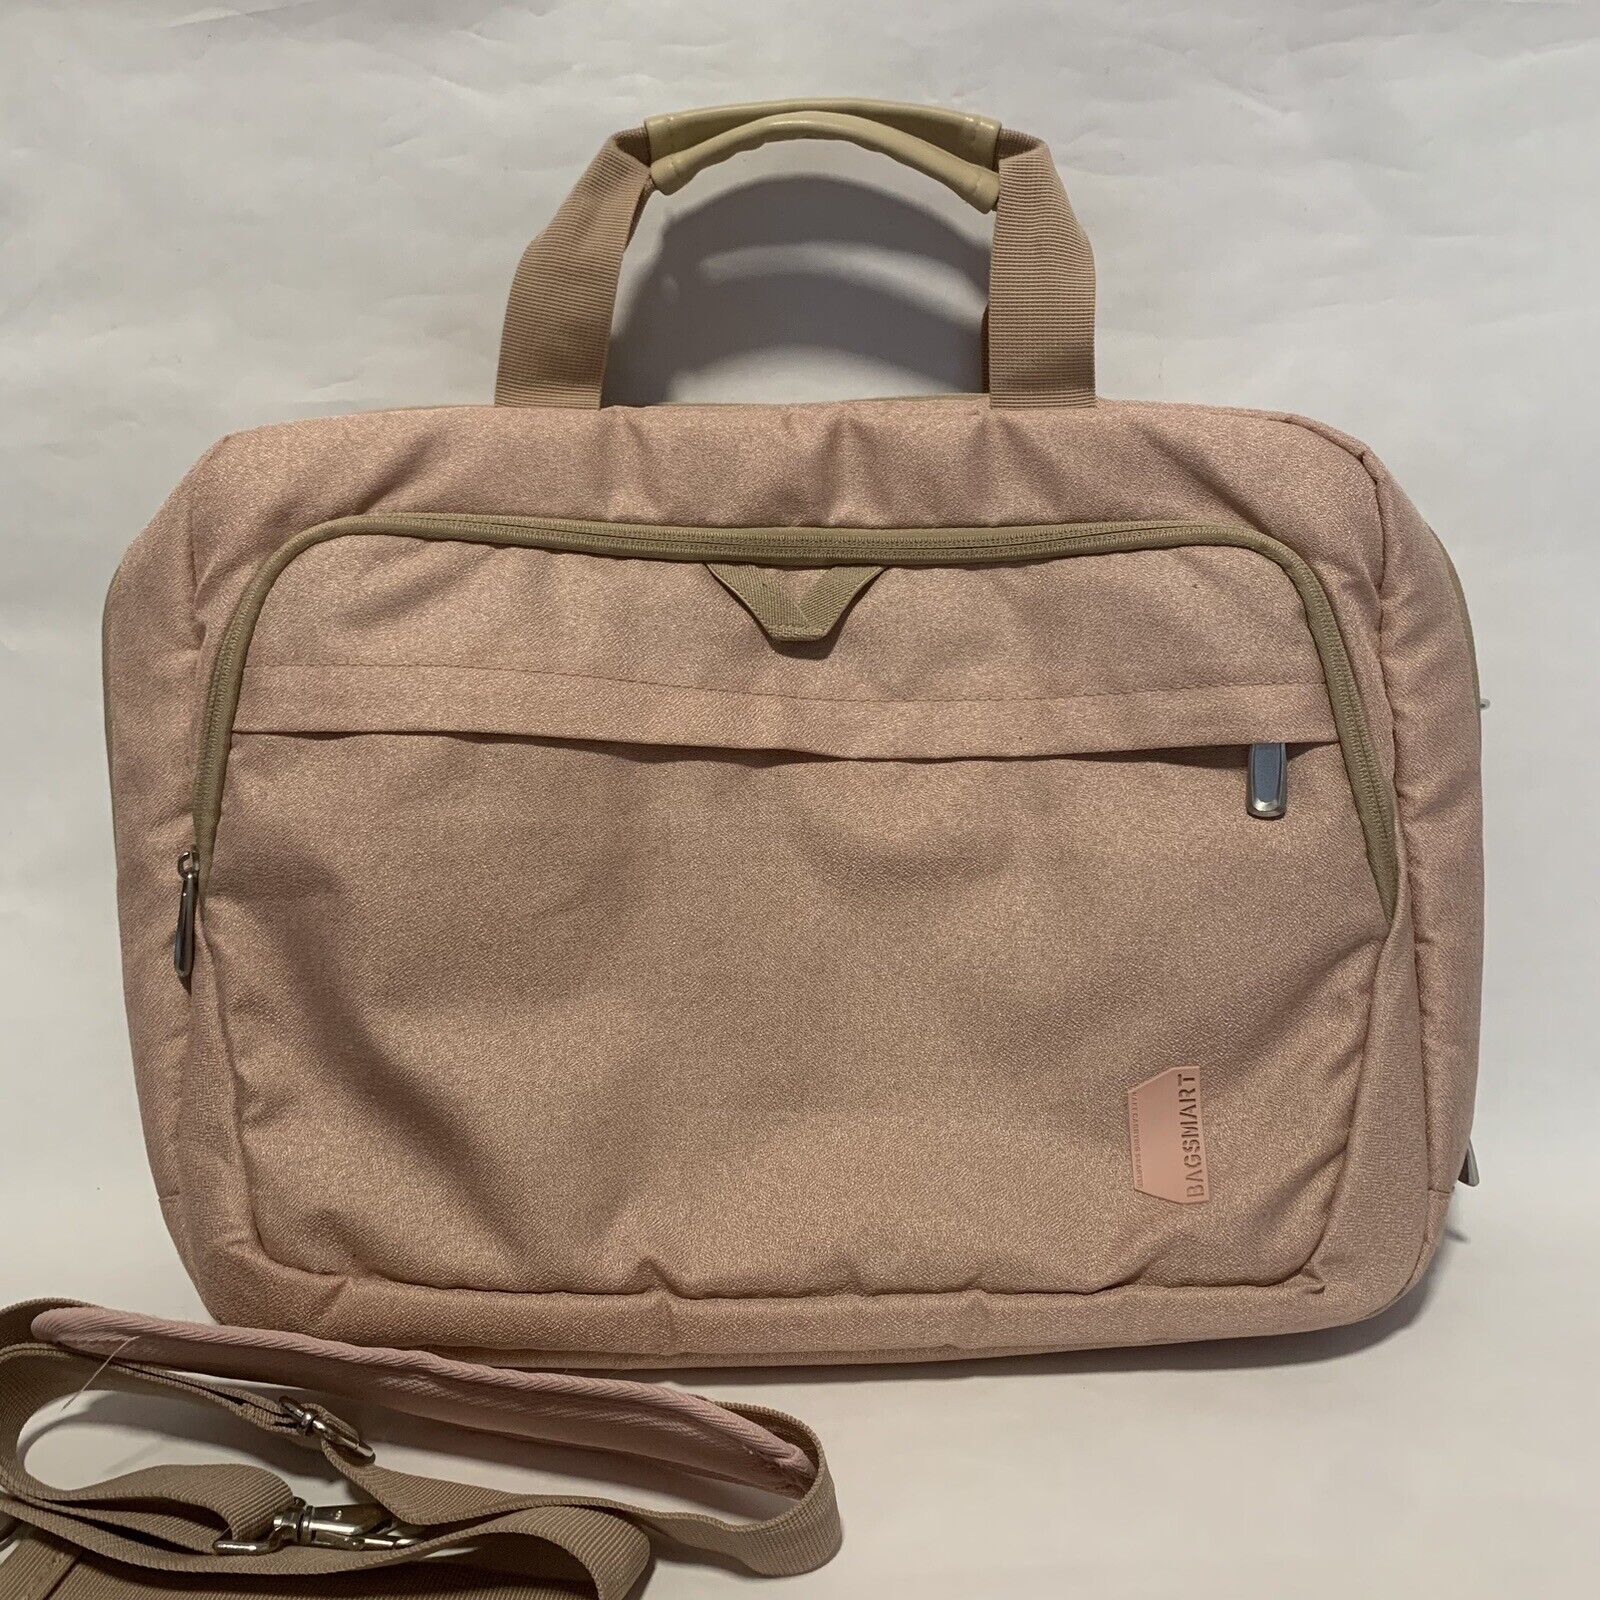 BAGSMART 17.3 Inch Laptop Bag, Expandable Briefcase, Travel Bag, Open Box Pink